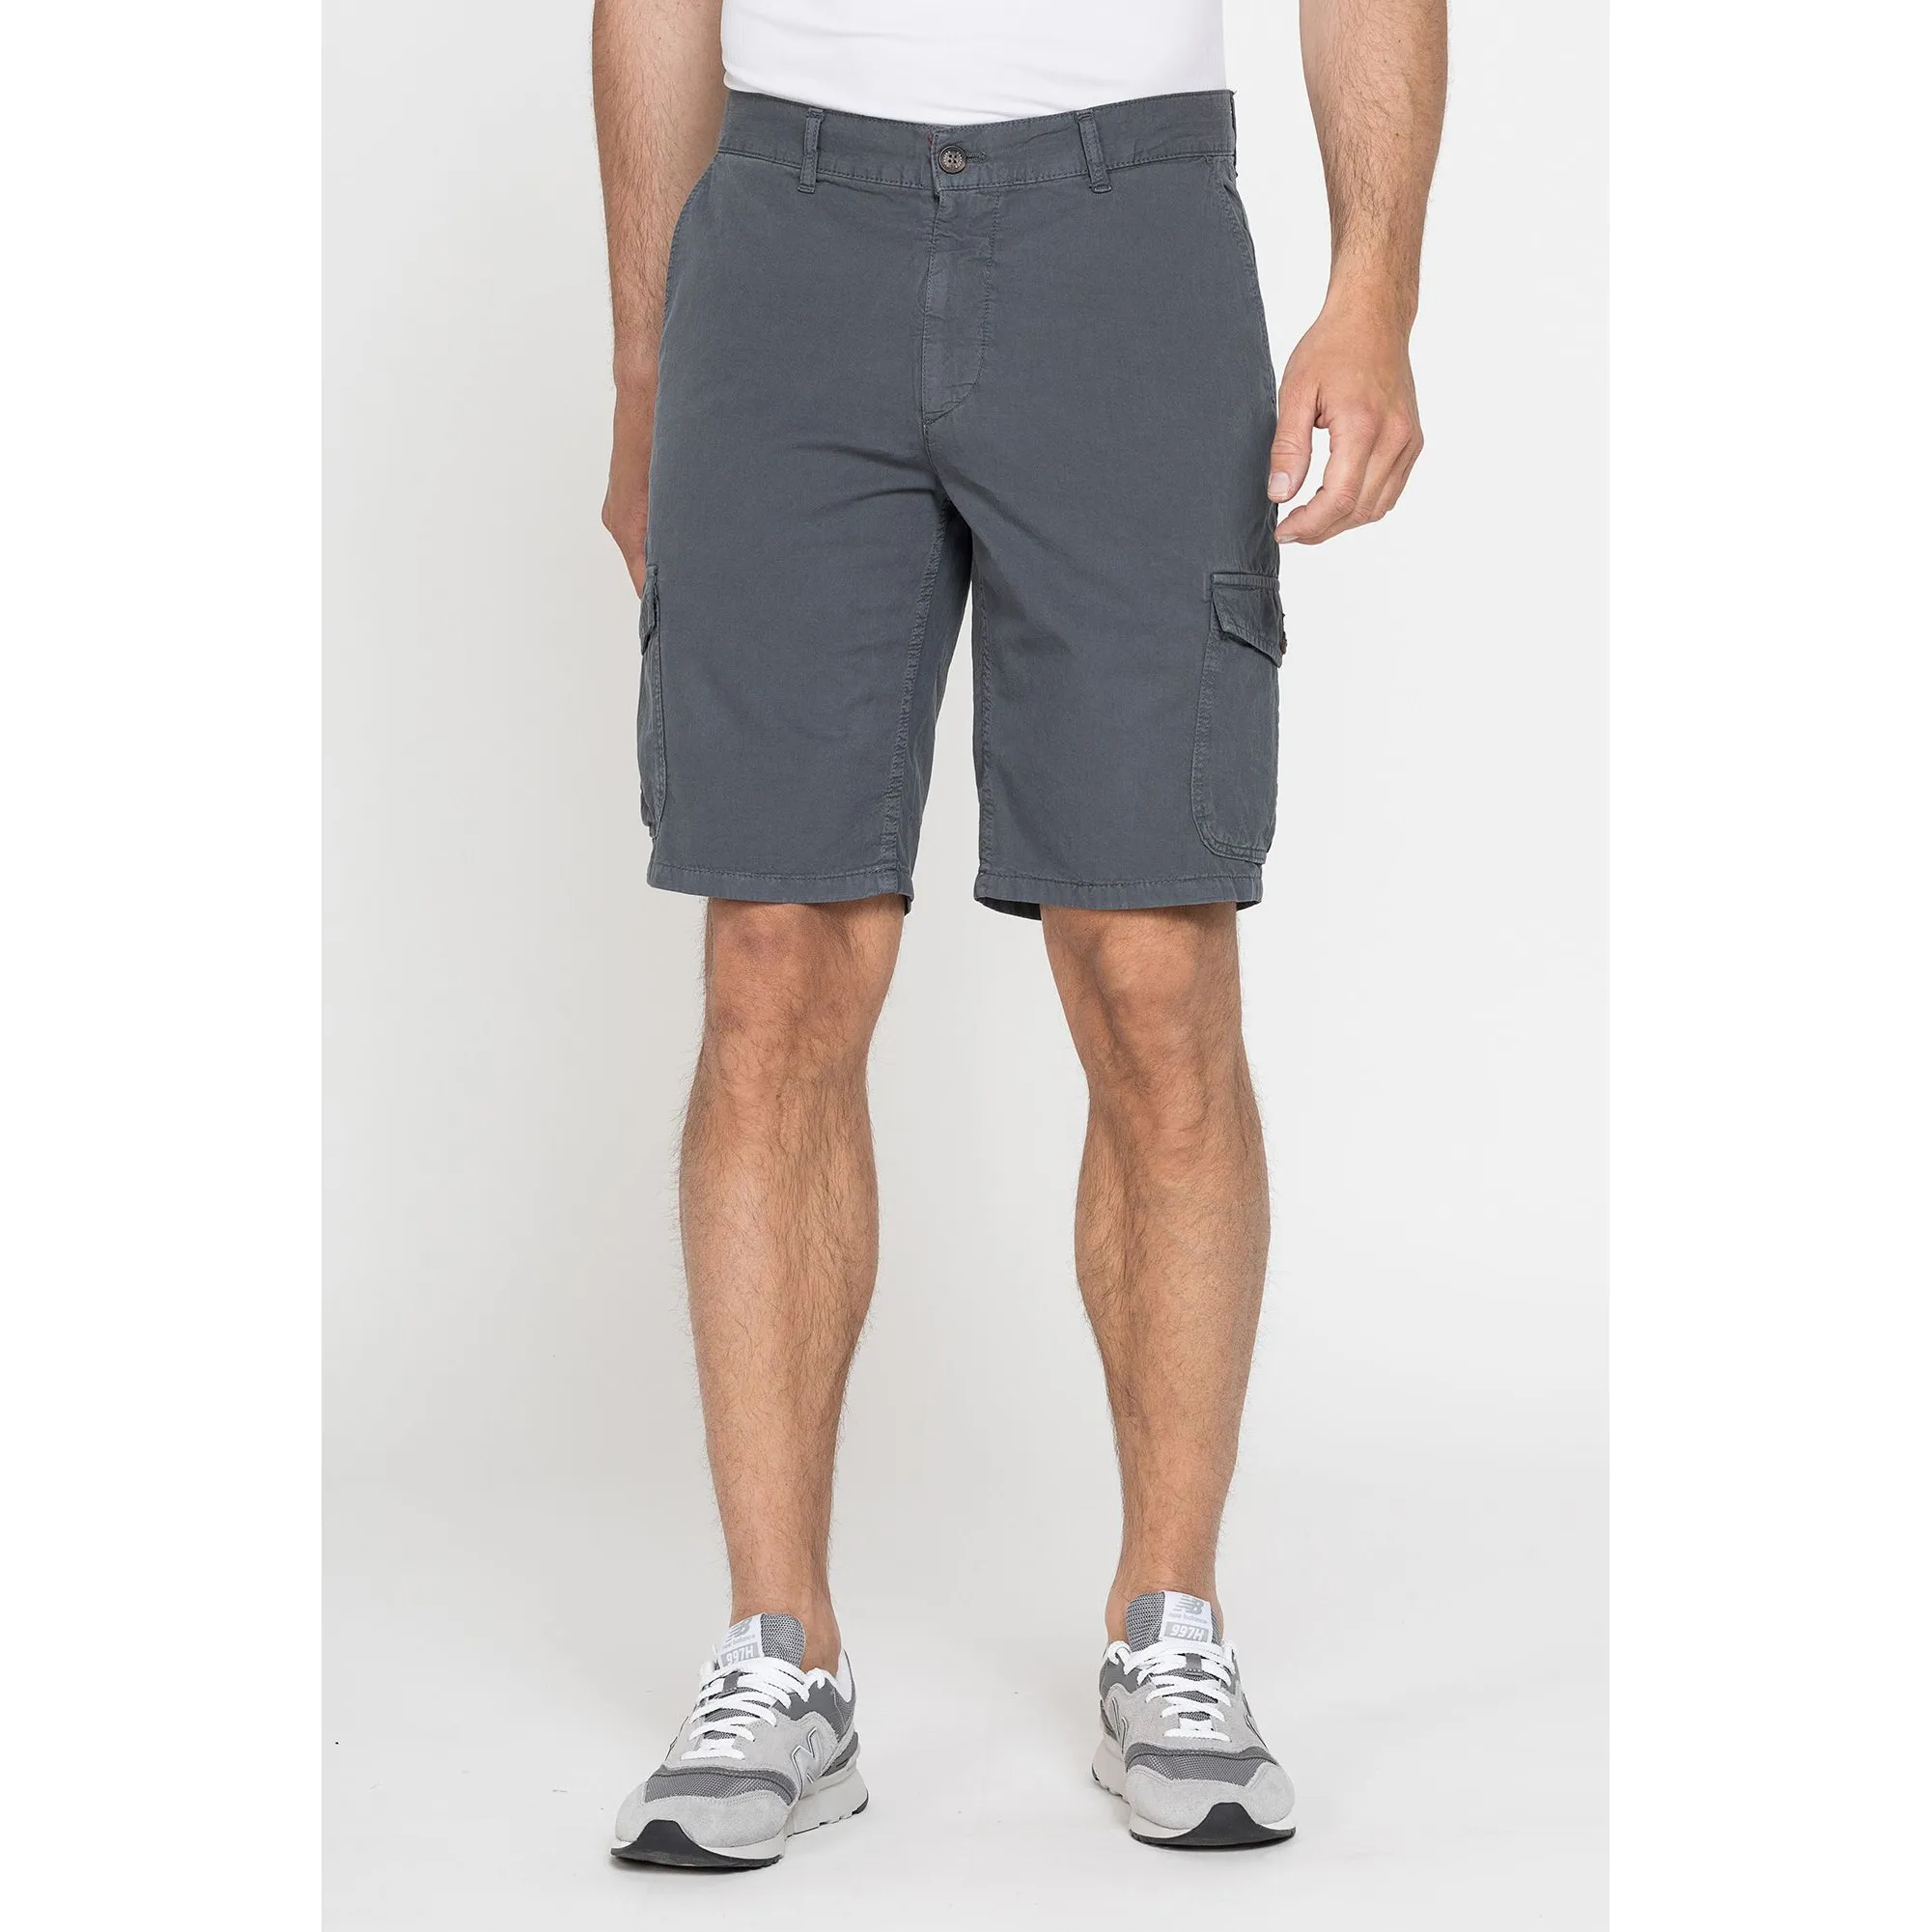 Wholesale italian clothes Grey in light gabardine style men cargo shorts 100% cotton fabric men's cargo pants